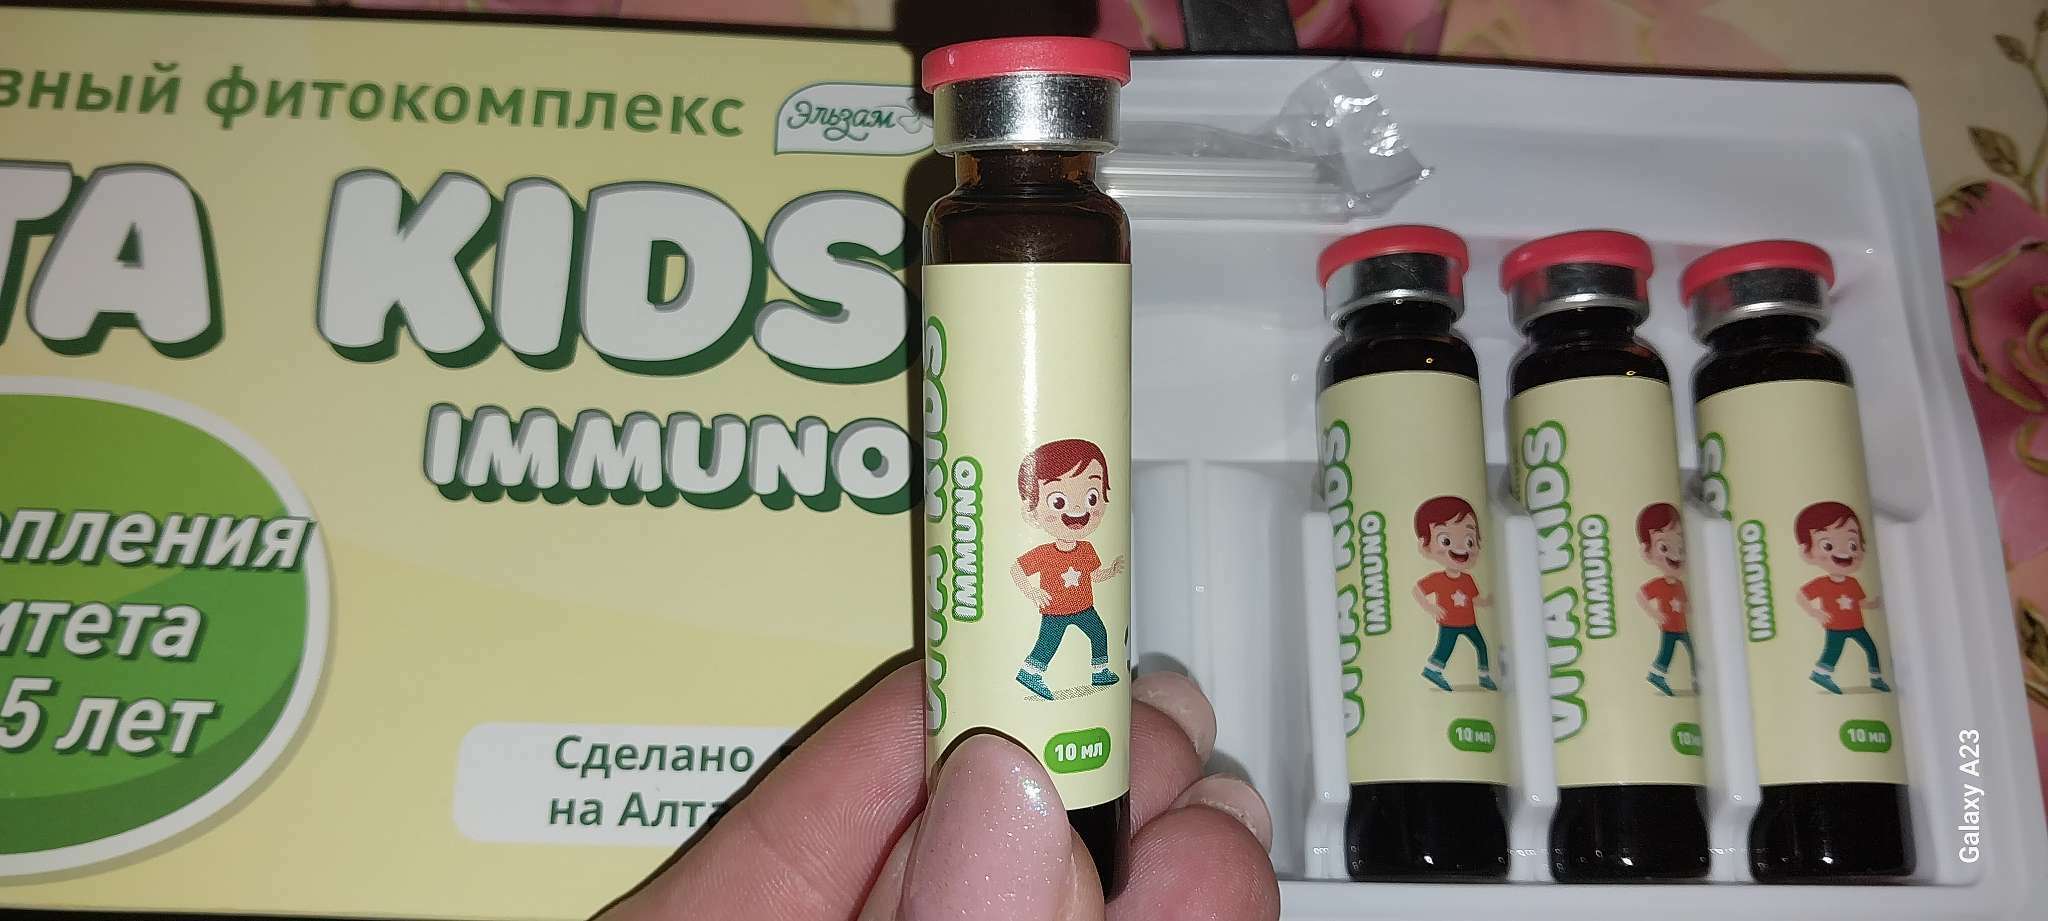 Фотография покупателя товара Фитокомплекс Vita Kids Immuno для укрепления иммунитета, 10 флаконов по 10 мл - Фото 1